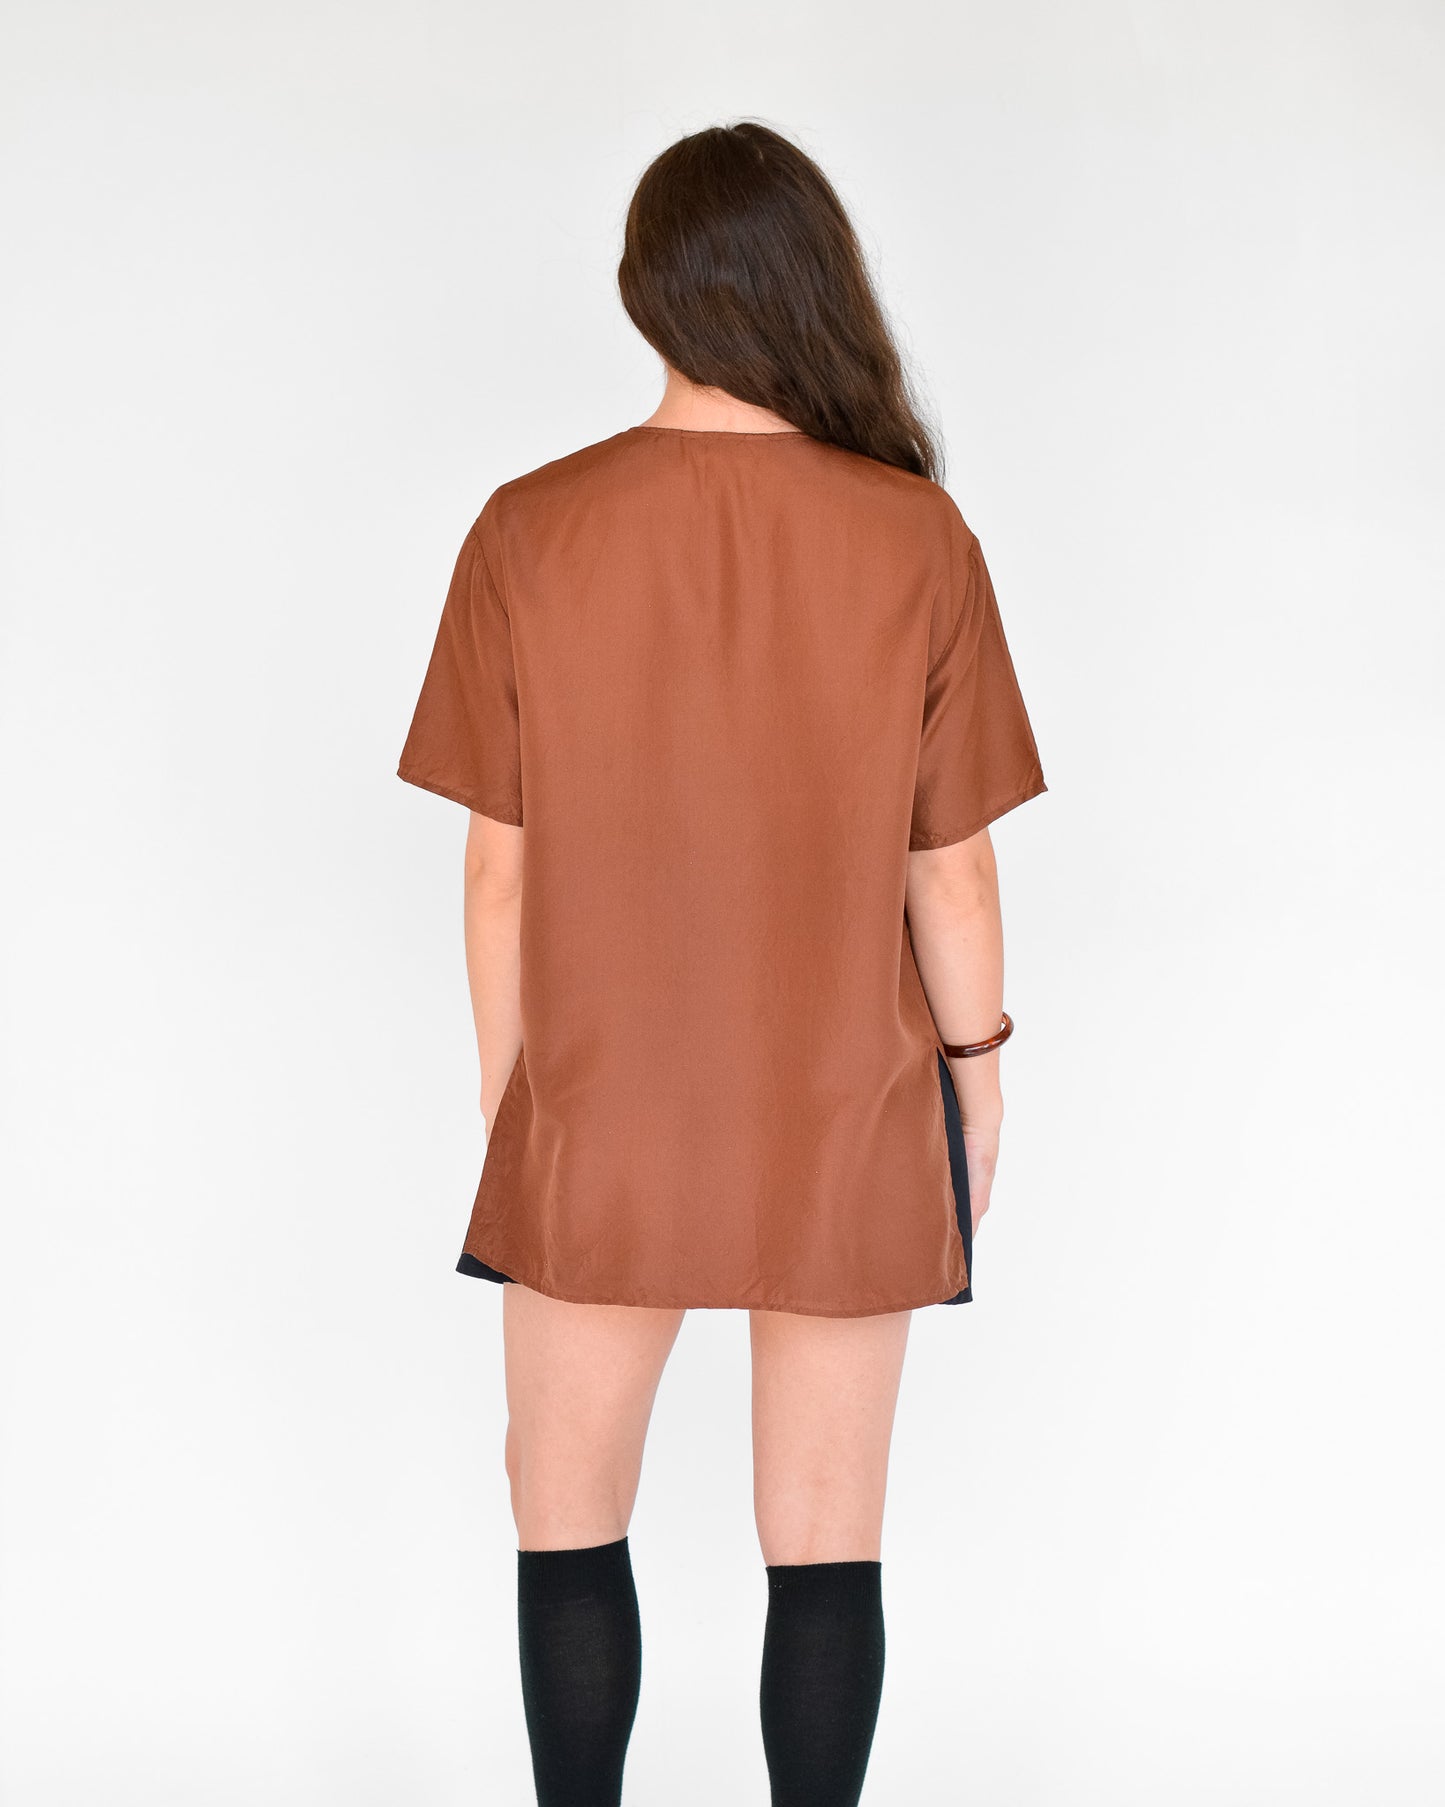 Cocoa Silk Shirt (M)